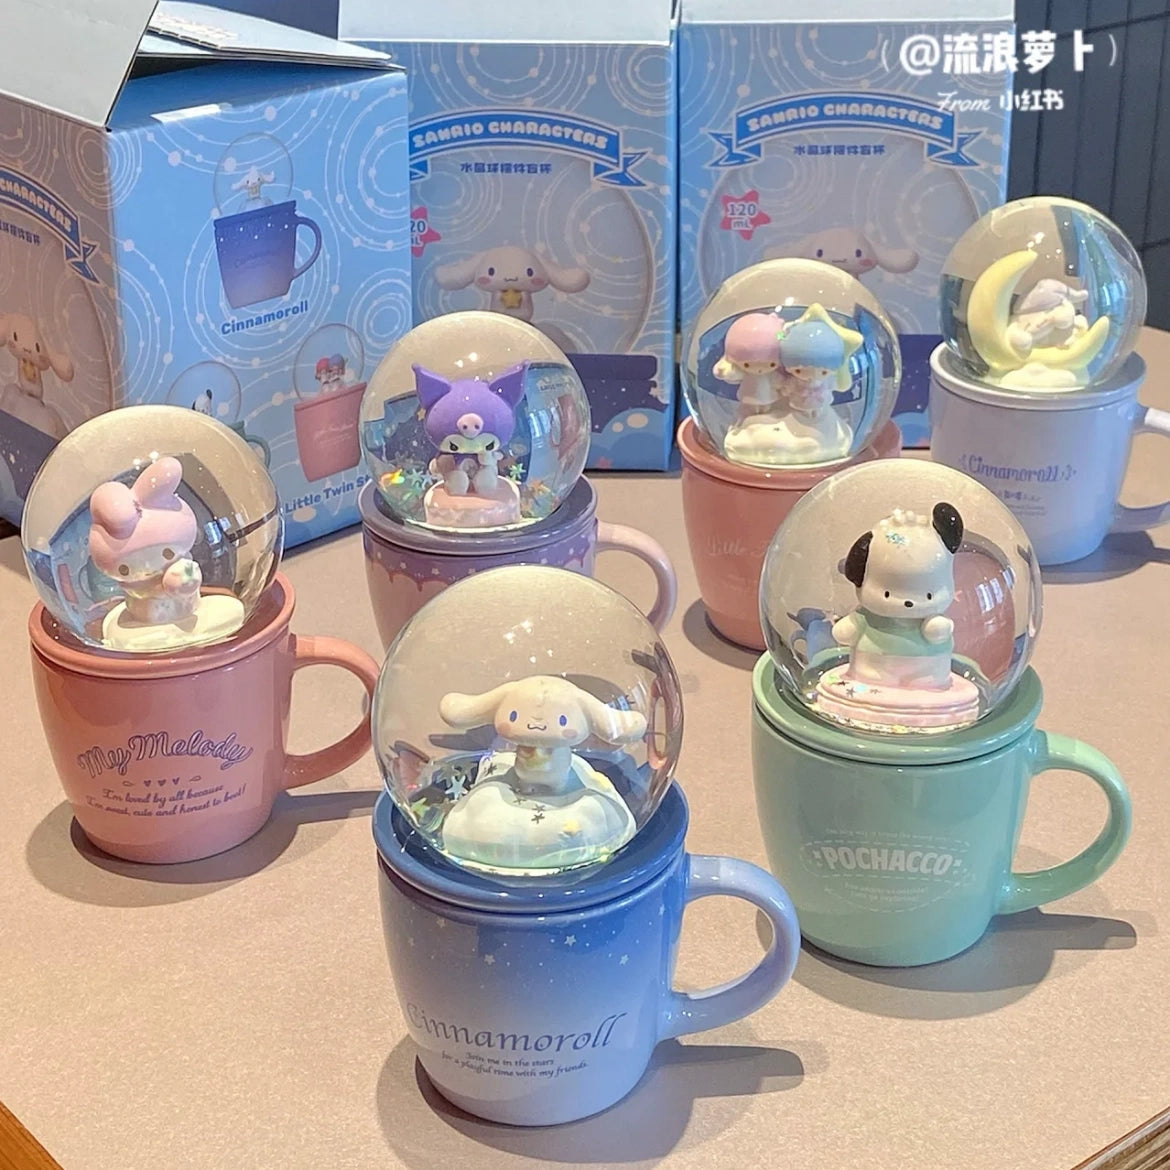 Miniso x Sanrio Characters Ceramic Mug Series-Whole Display Box (6pcs)-Miniso-Ace Cards & Collectibles